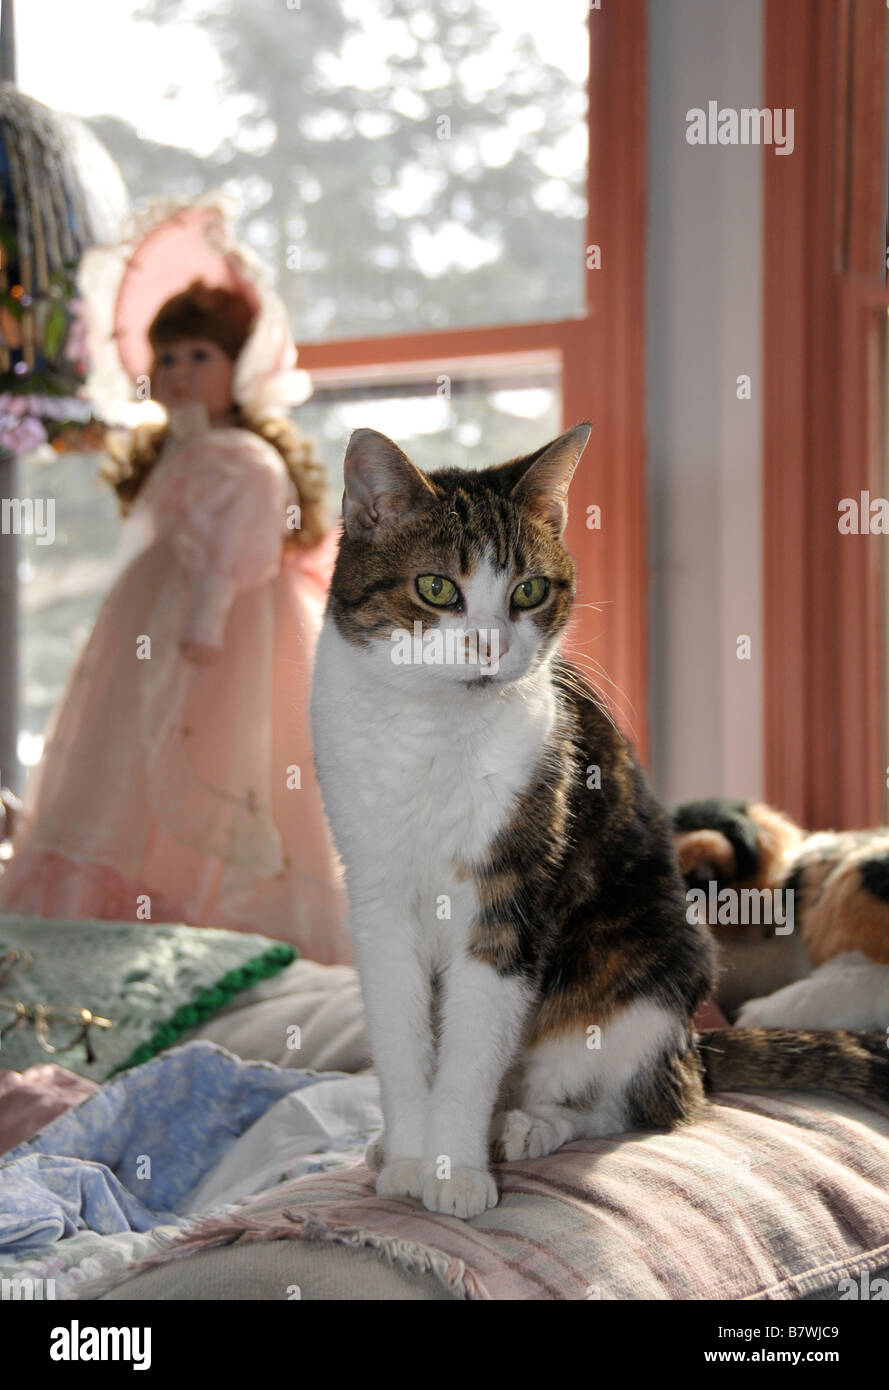 Calico cat sitting near window. Stock Photo